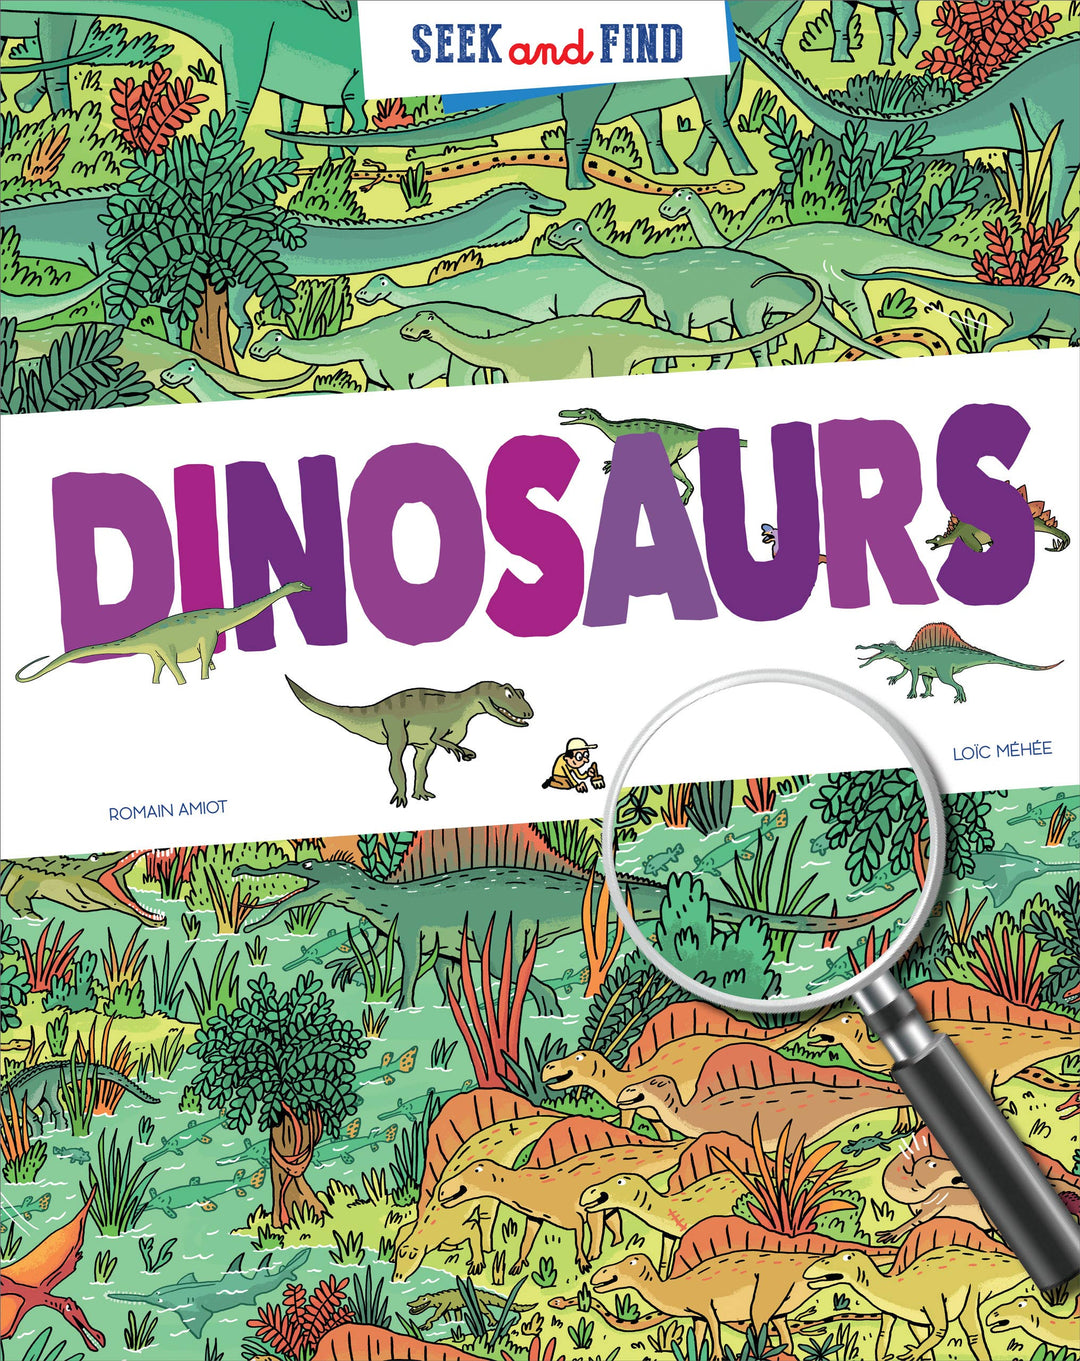 Peter Pauper Press - Seek & Find - Dinosaurs